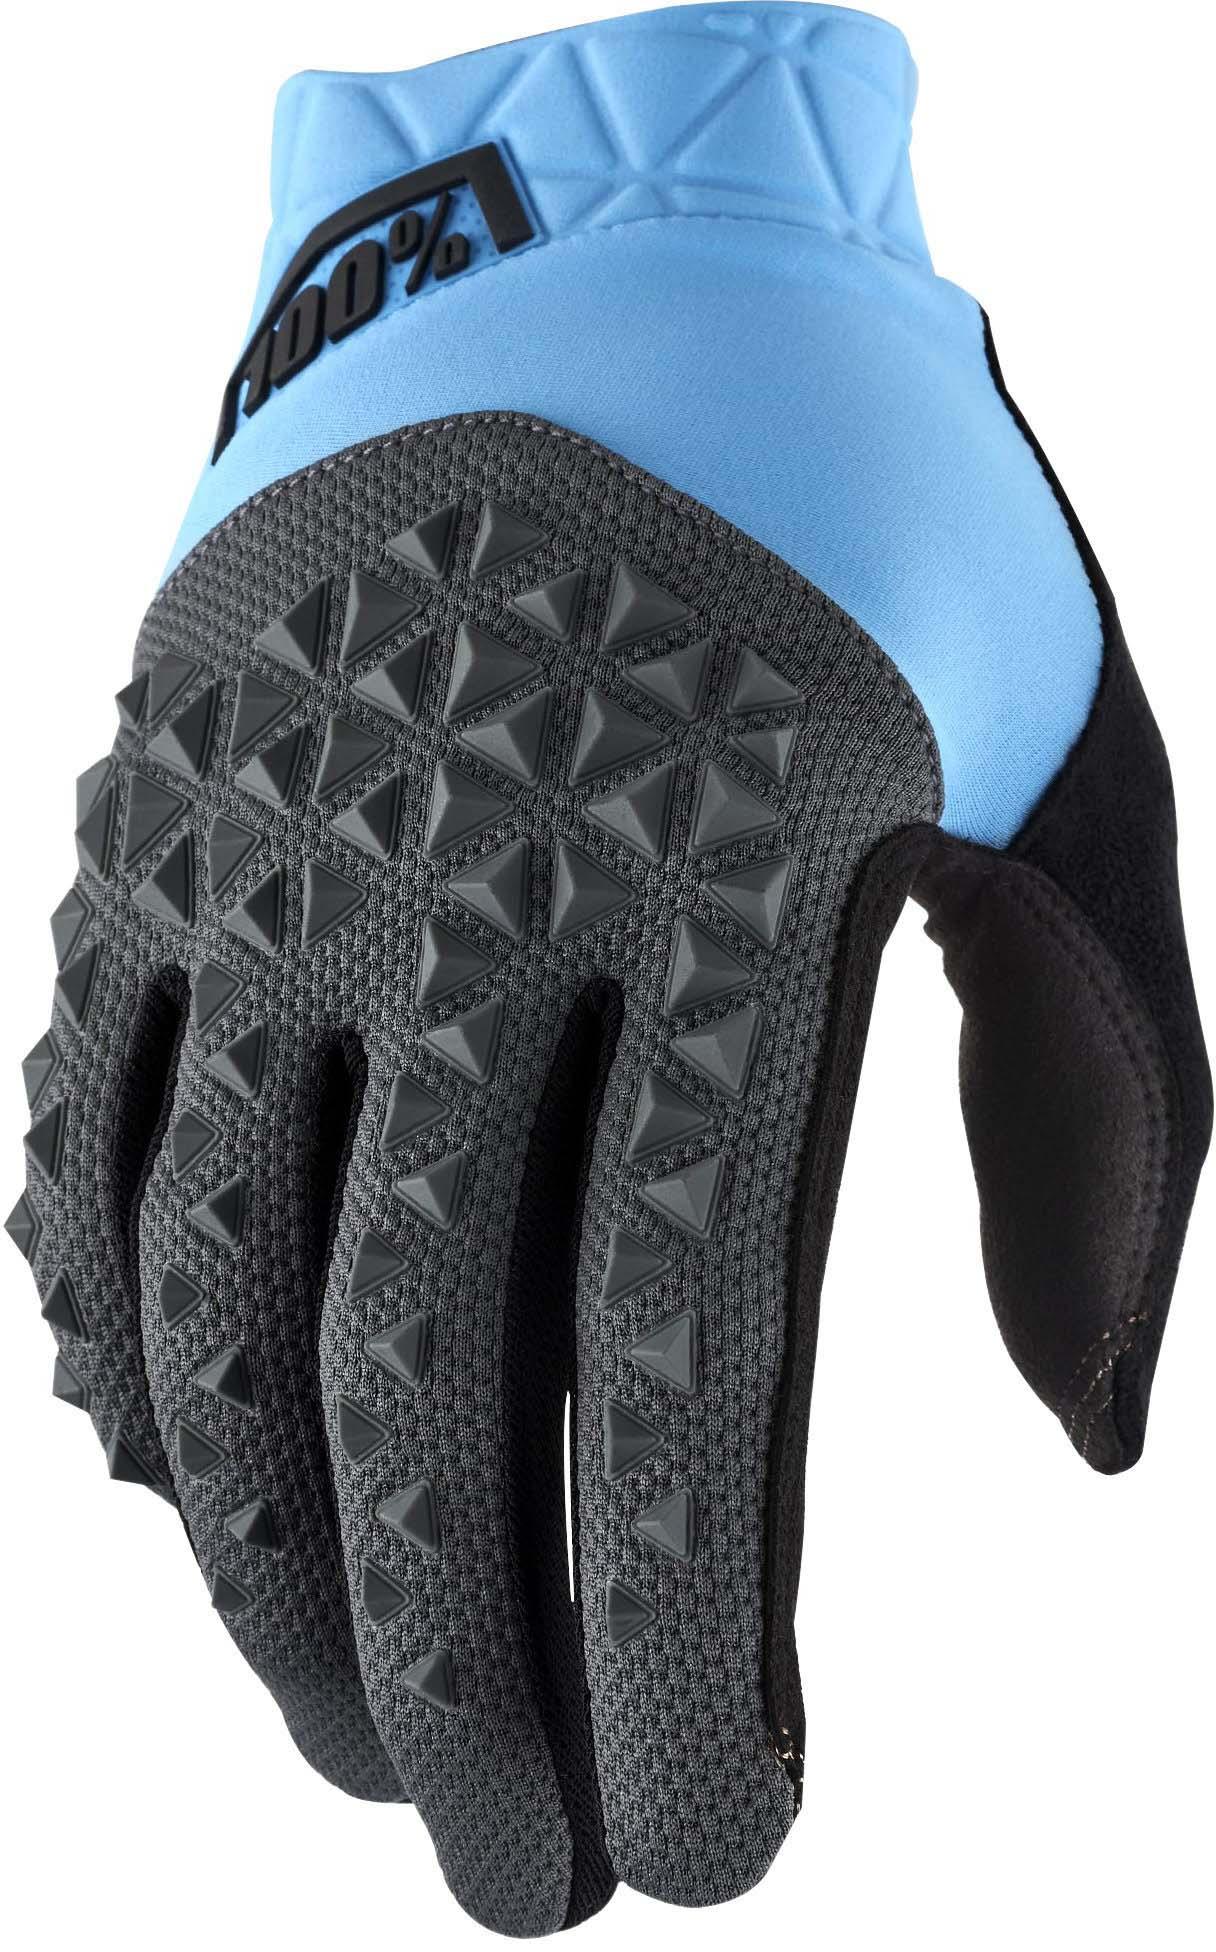 100% Geomatic Gloves - Cyan/charcoal